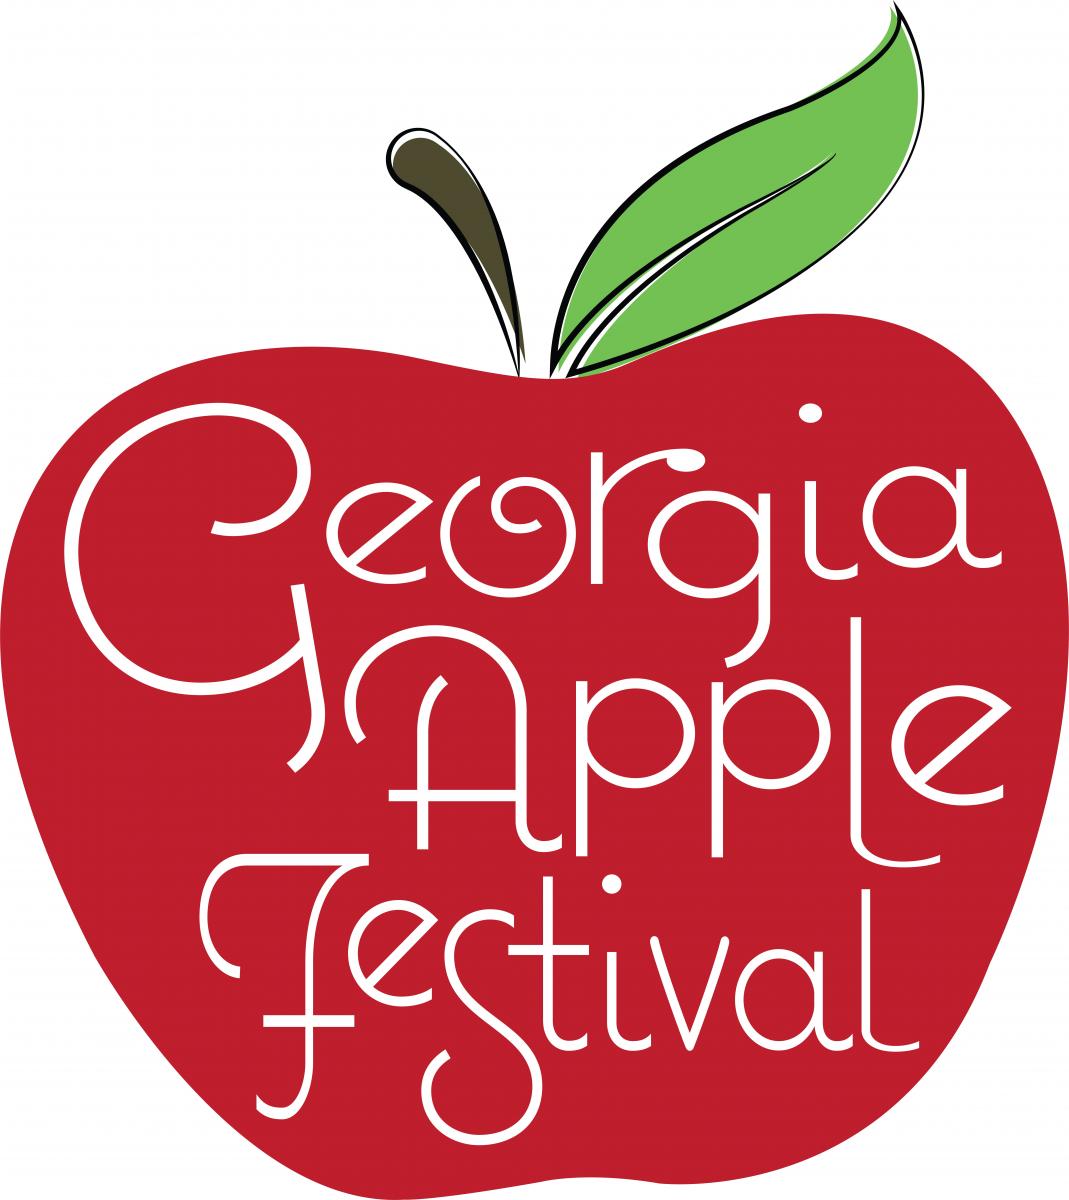 Georgia Apple Festival